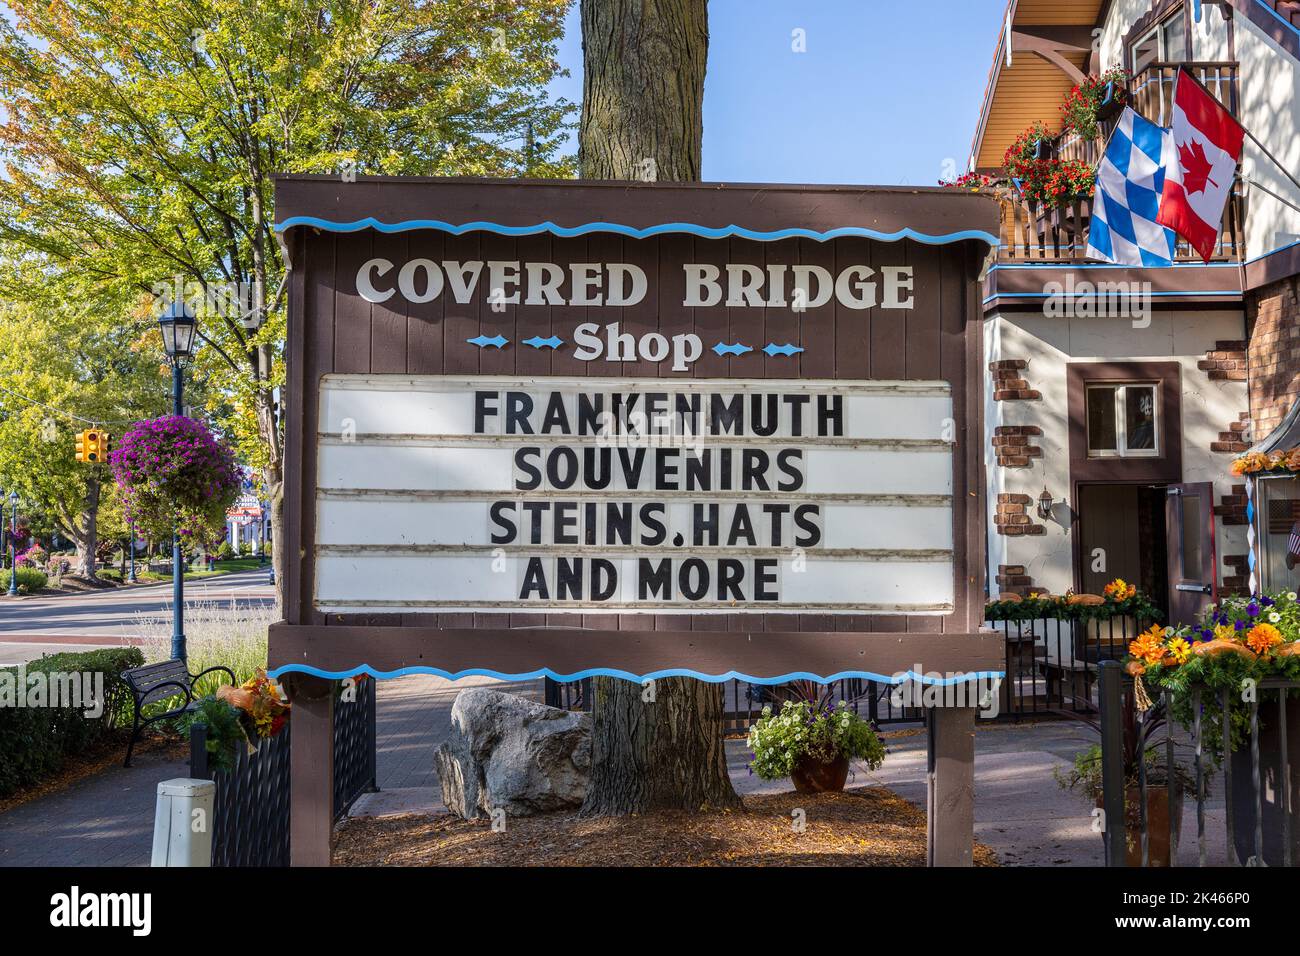 Frankenmuth Covered Bridge Shop Sign Venta de souvenirs turísticos en Frankenmuth Michigan USA Foto de stock